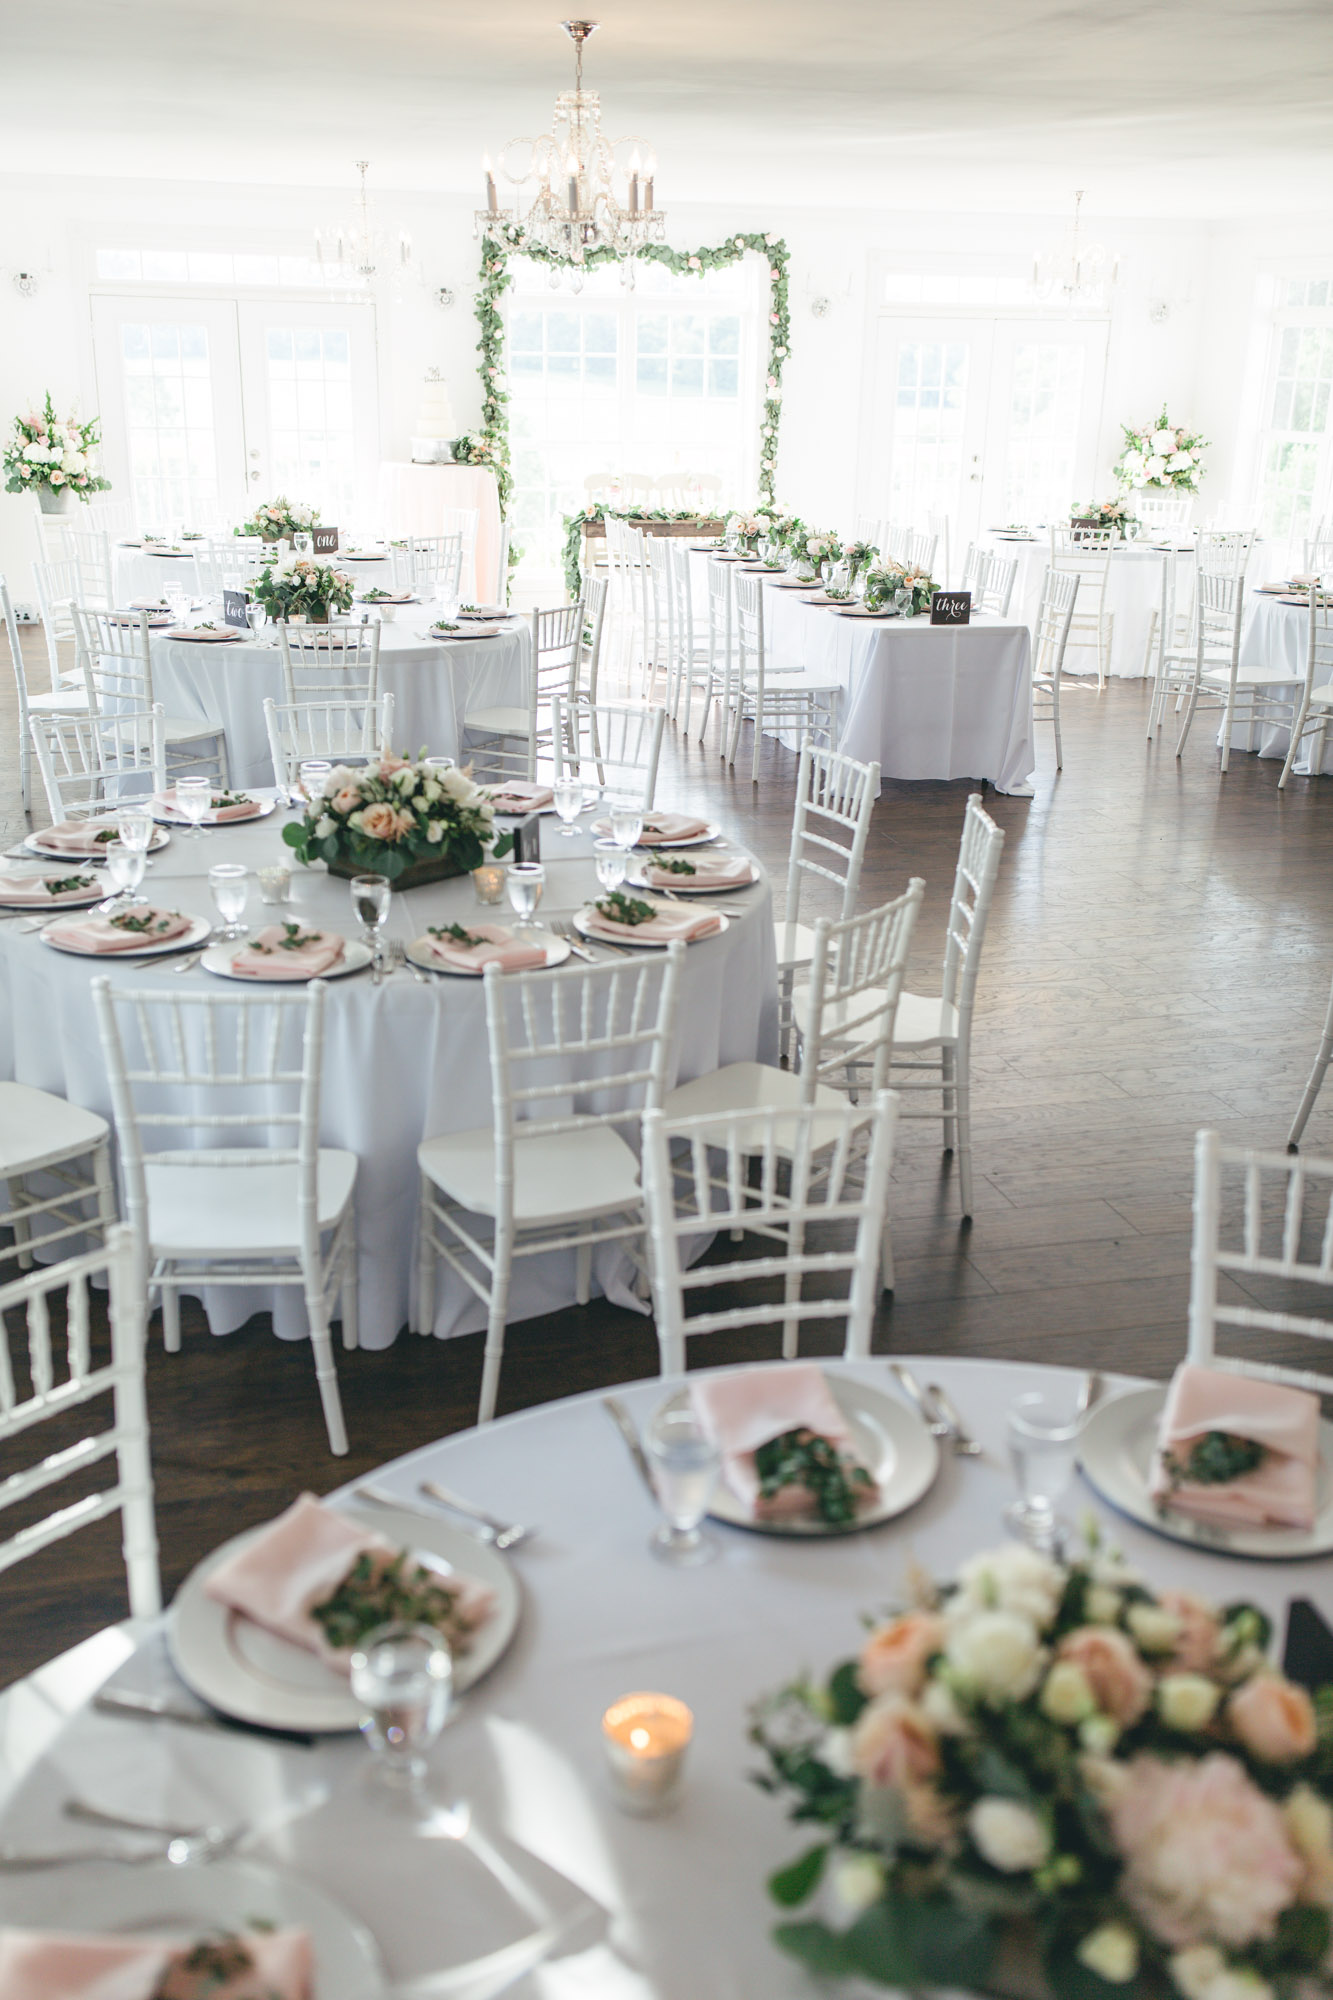 Maral Noori Photography | Rixey Manor | Virginia Wedding Photographer | Reception Table Details